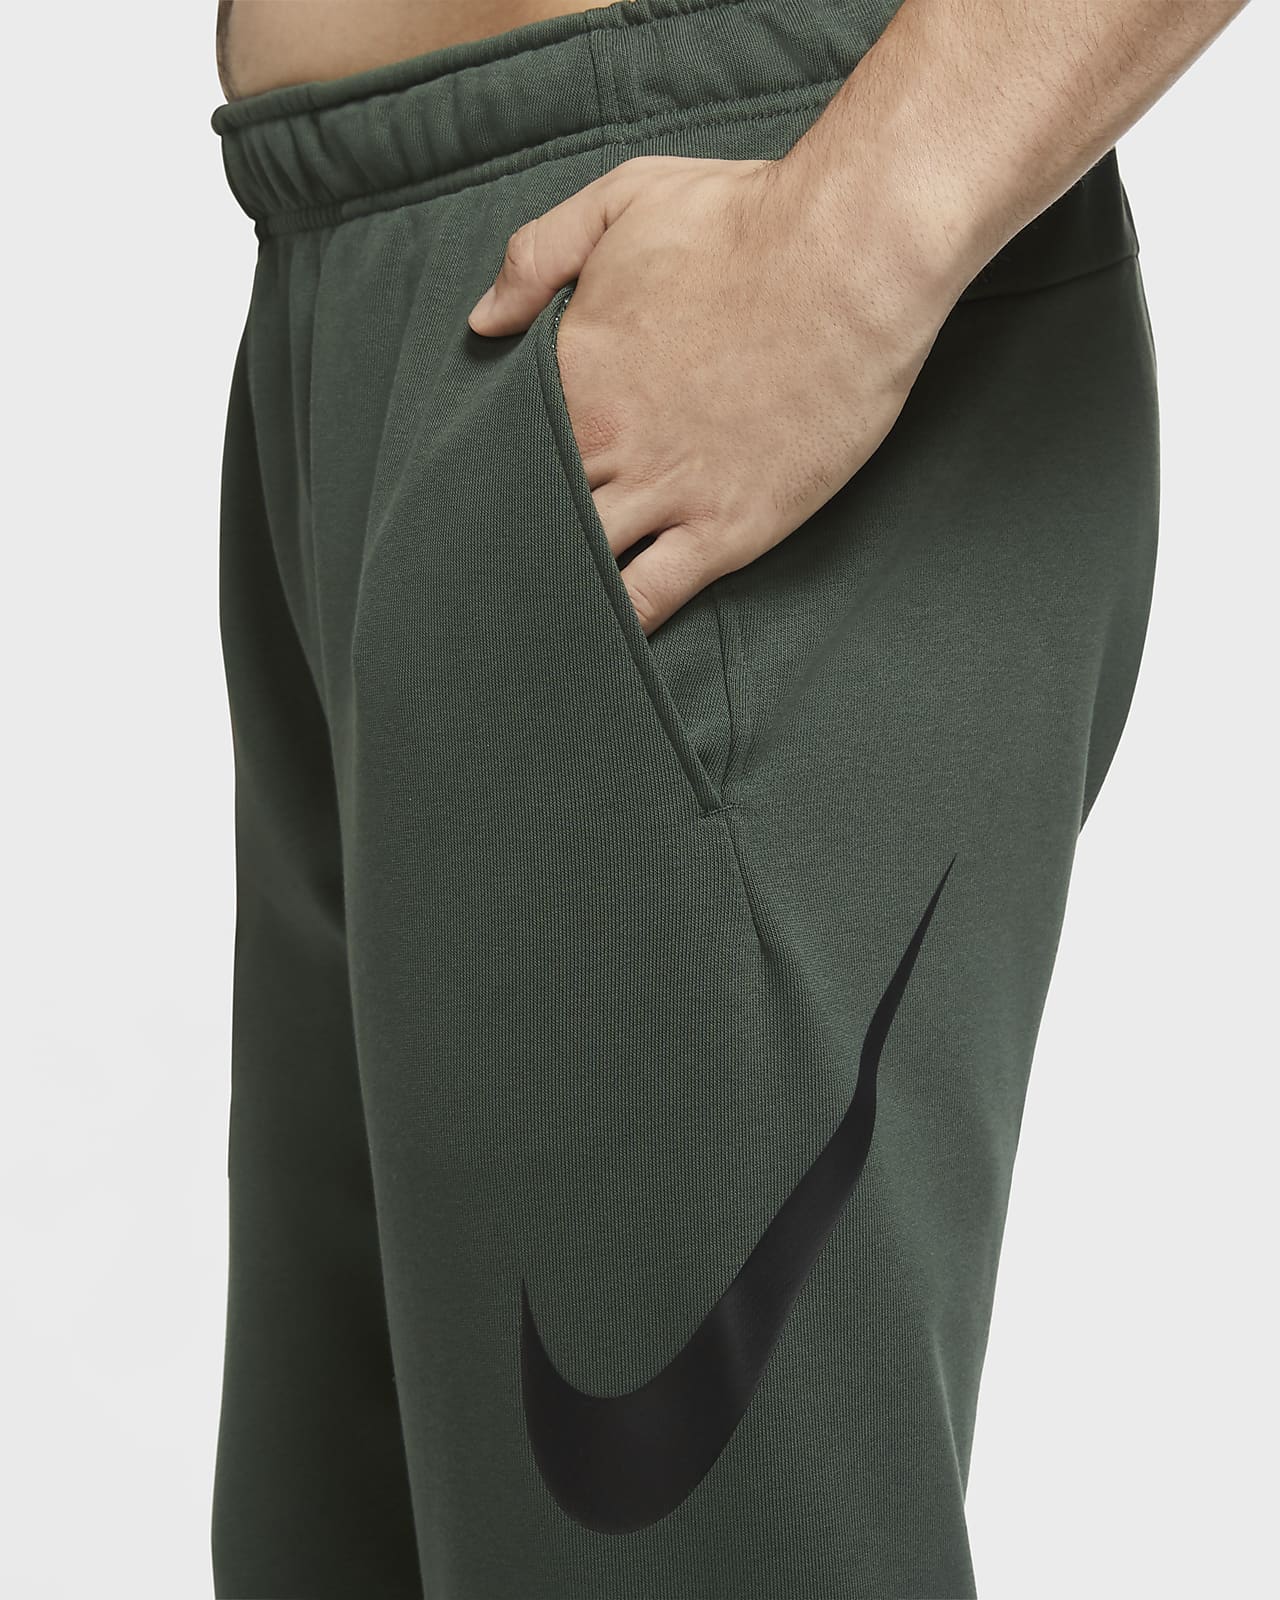 Nike Dri-FIT Men's Tapered Training Trousers. Nike NZ